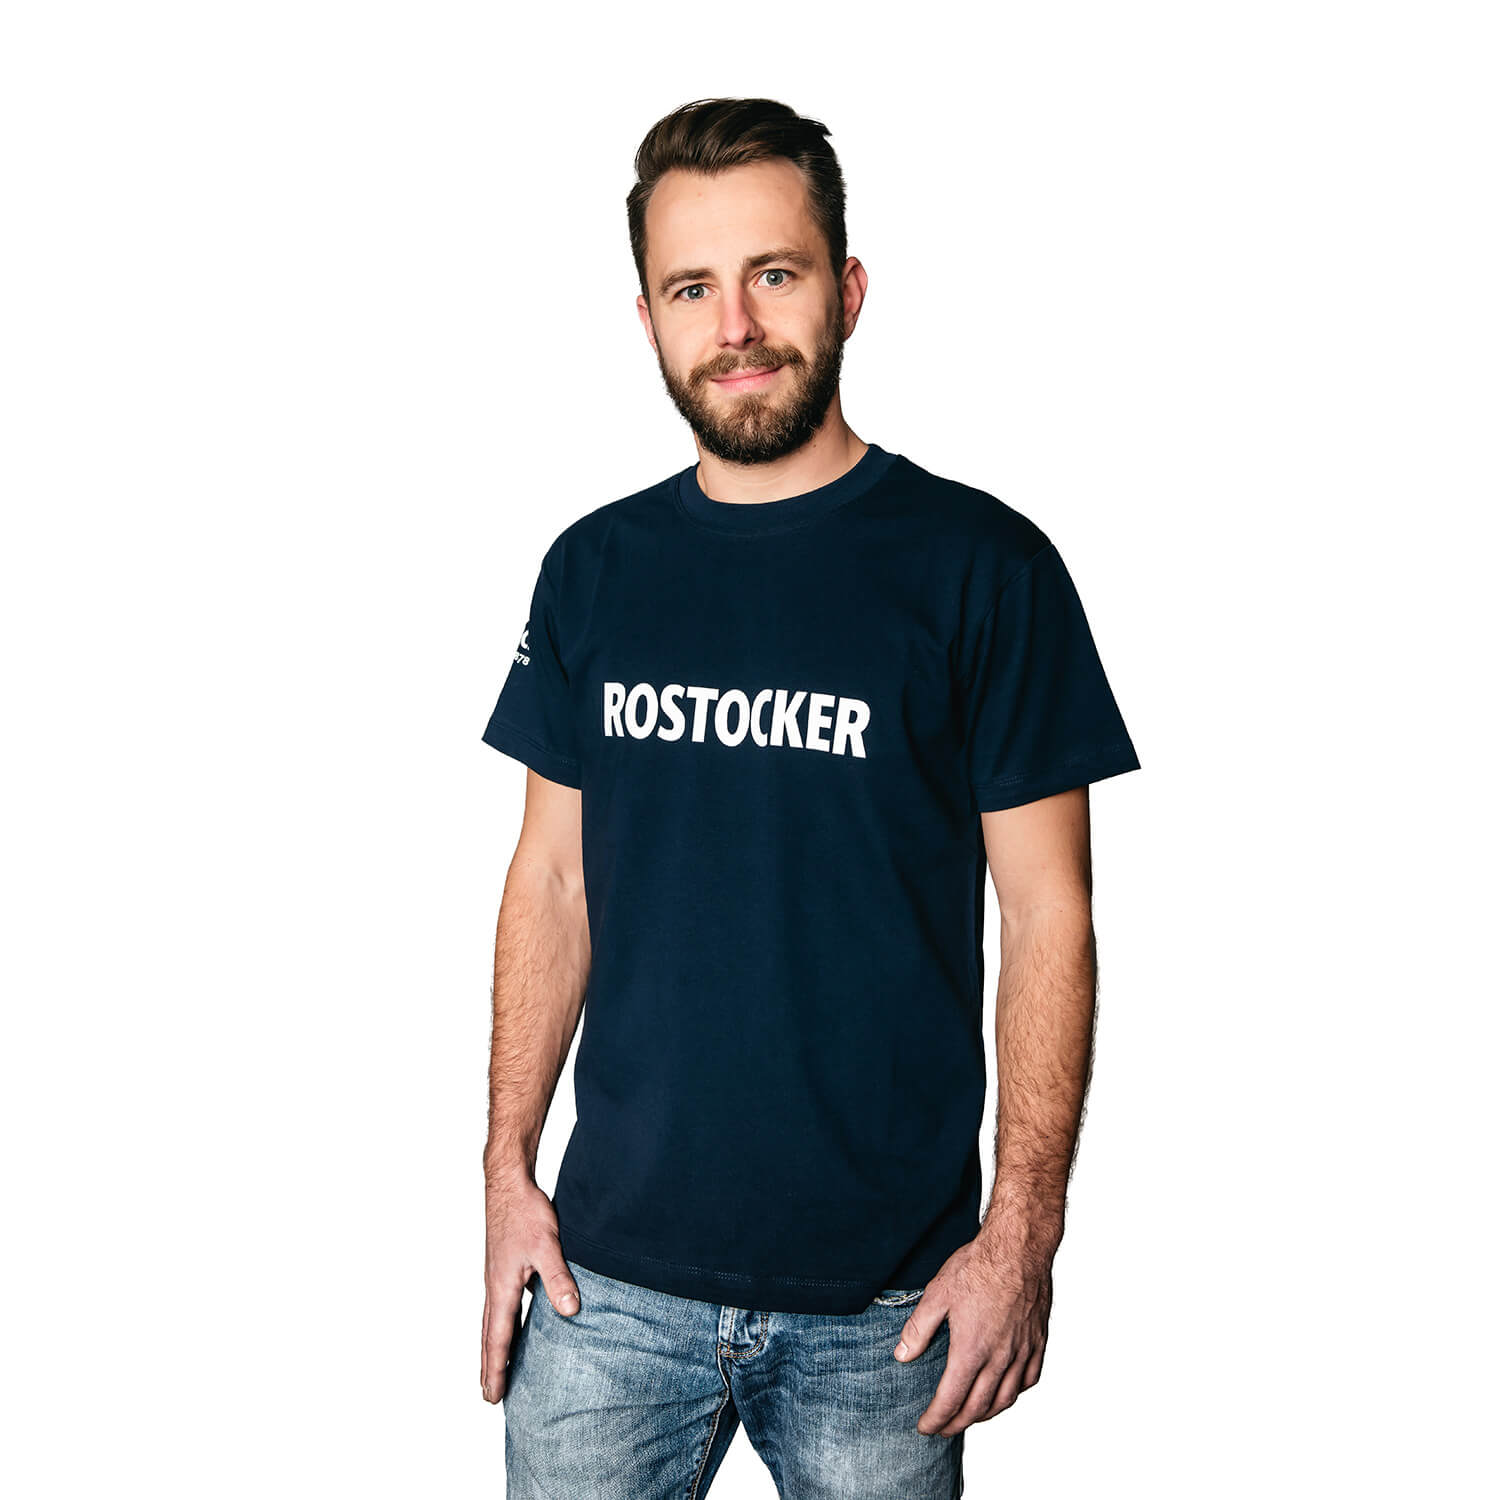 Rostocker T-Shirt - Classic